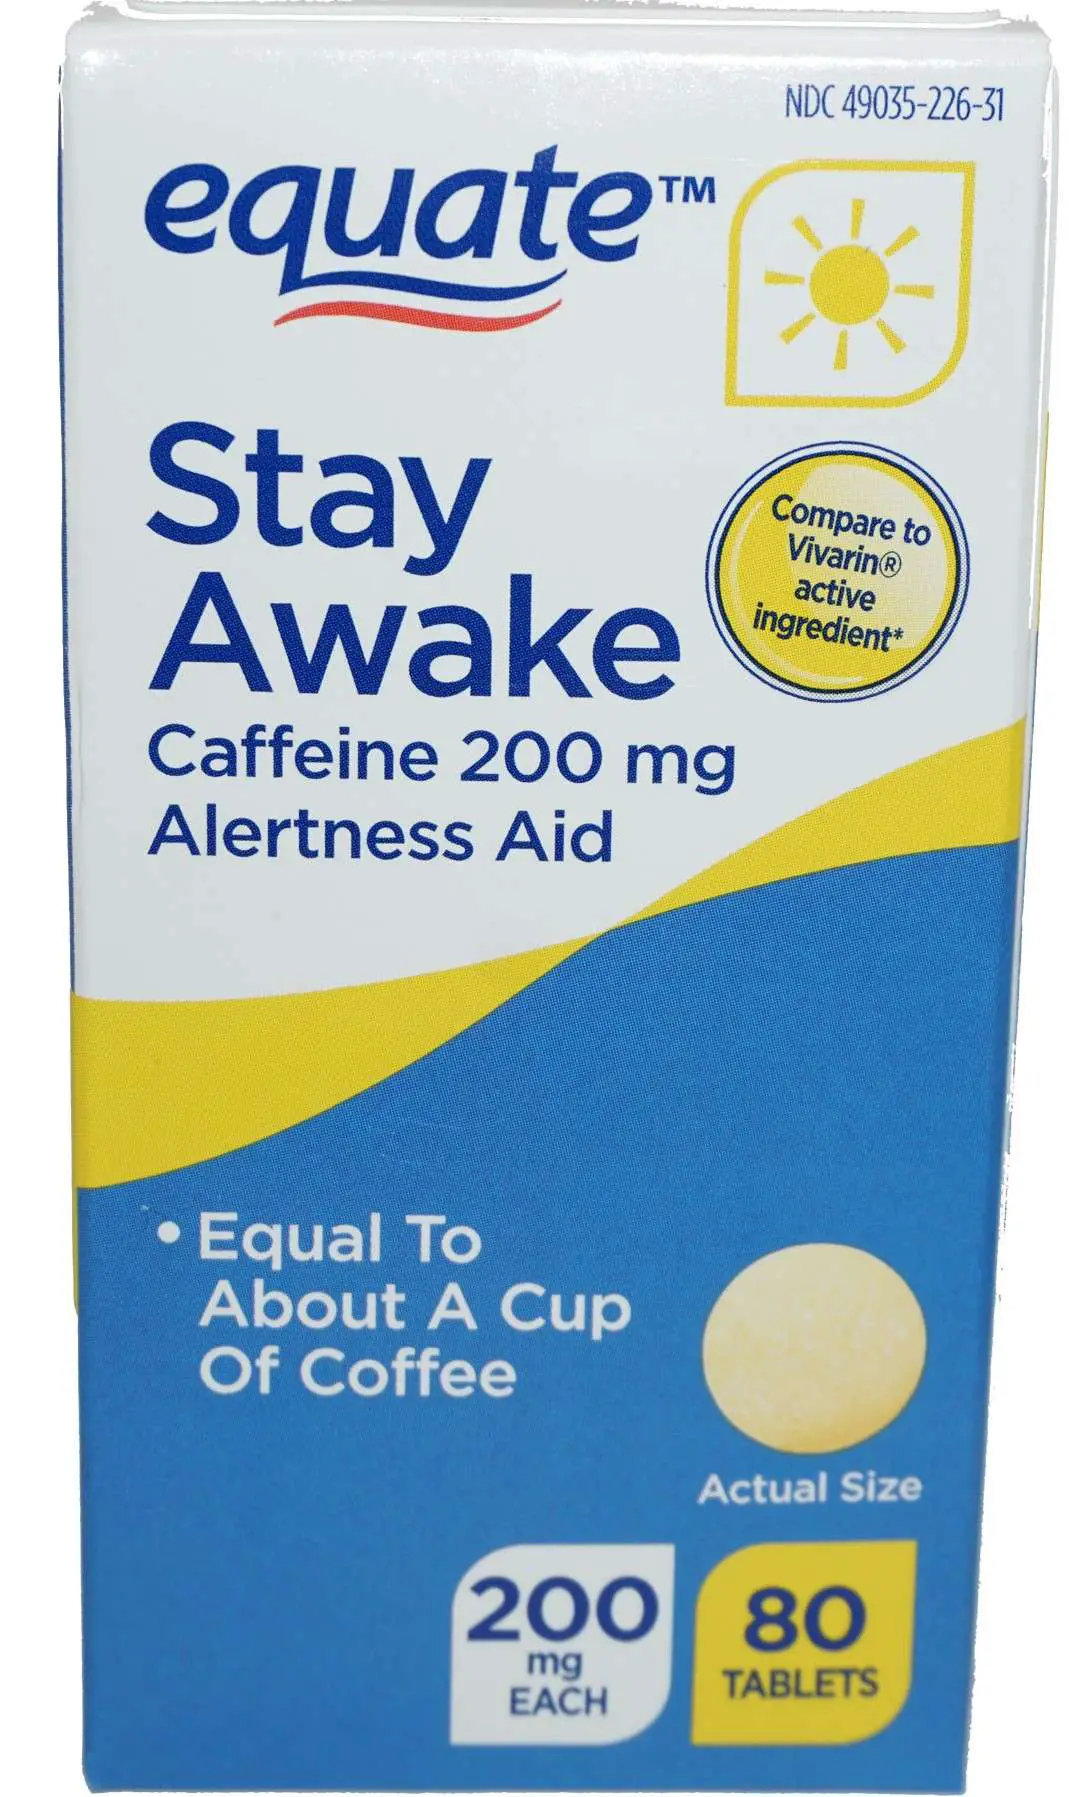 Equate Stay Awake Caffeine Alertness Aid 200mg 80 Tablets ...